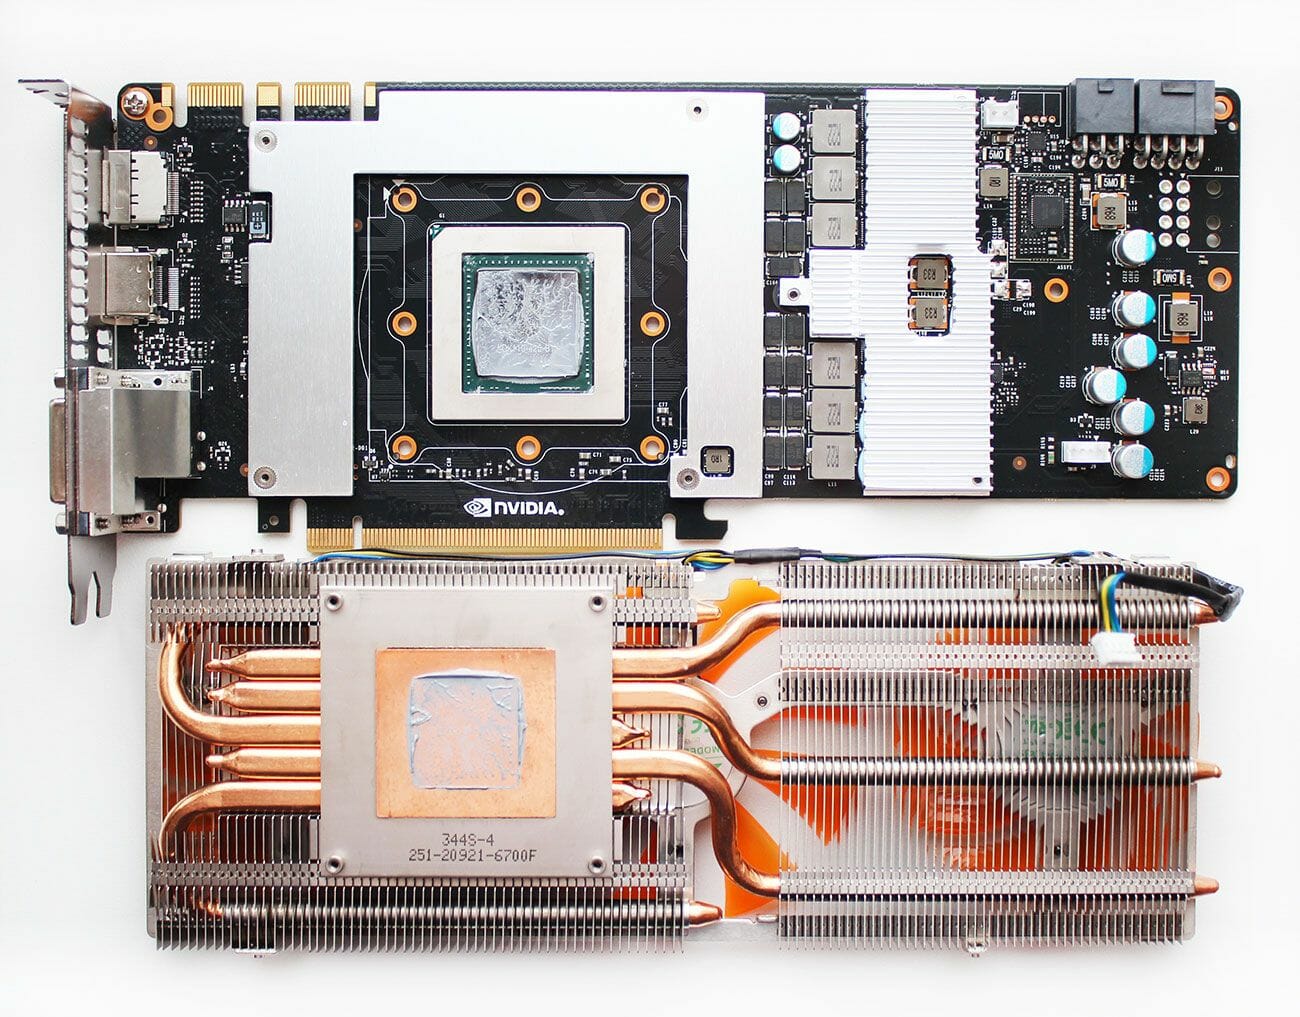 14 ZOTAC GeForce GTX 780 Ti cooling system